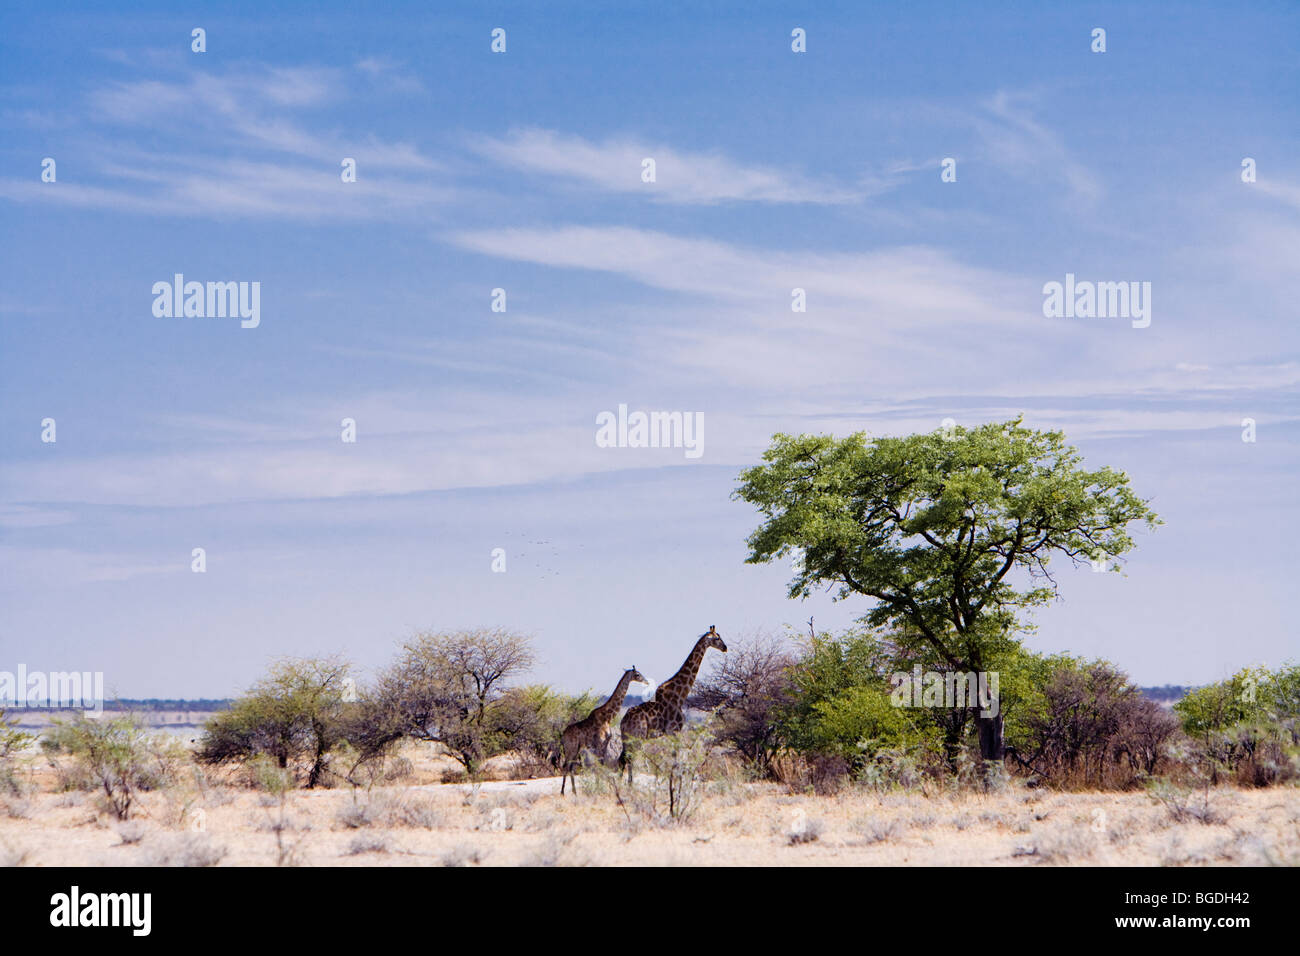 Girafe et son veau. Communauté Girafe (Giraffa camelopardalis angolensis), Etosha National Park, Namibie Banque D'Images